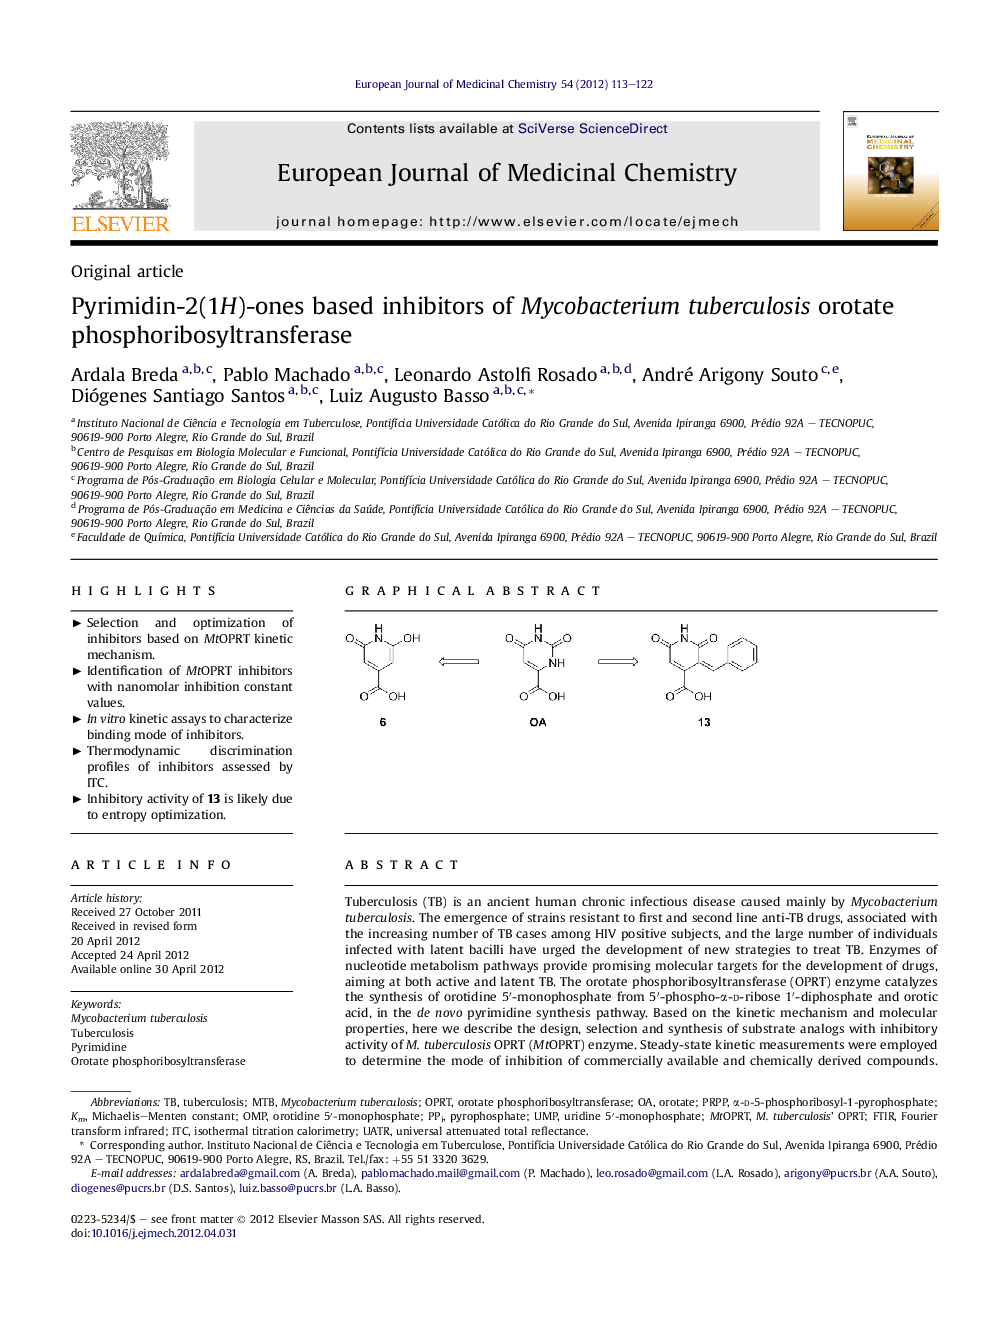 Pyrimidin-2(1H)-ones based inhibitors of Mycobacterium tuberculosis orotate phosphoribosyltransferase